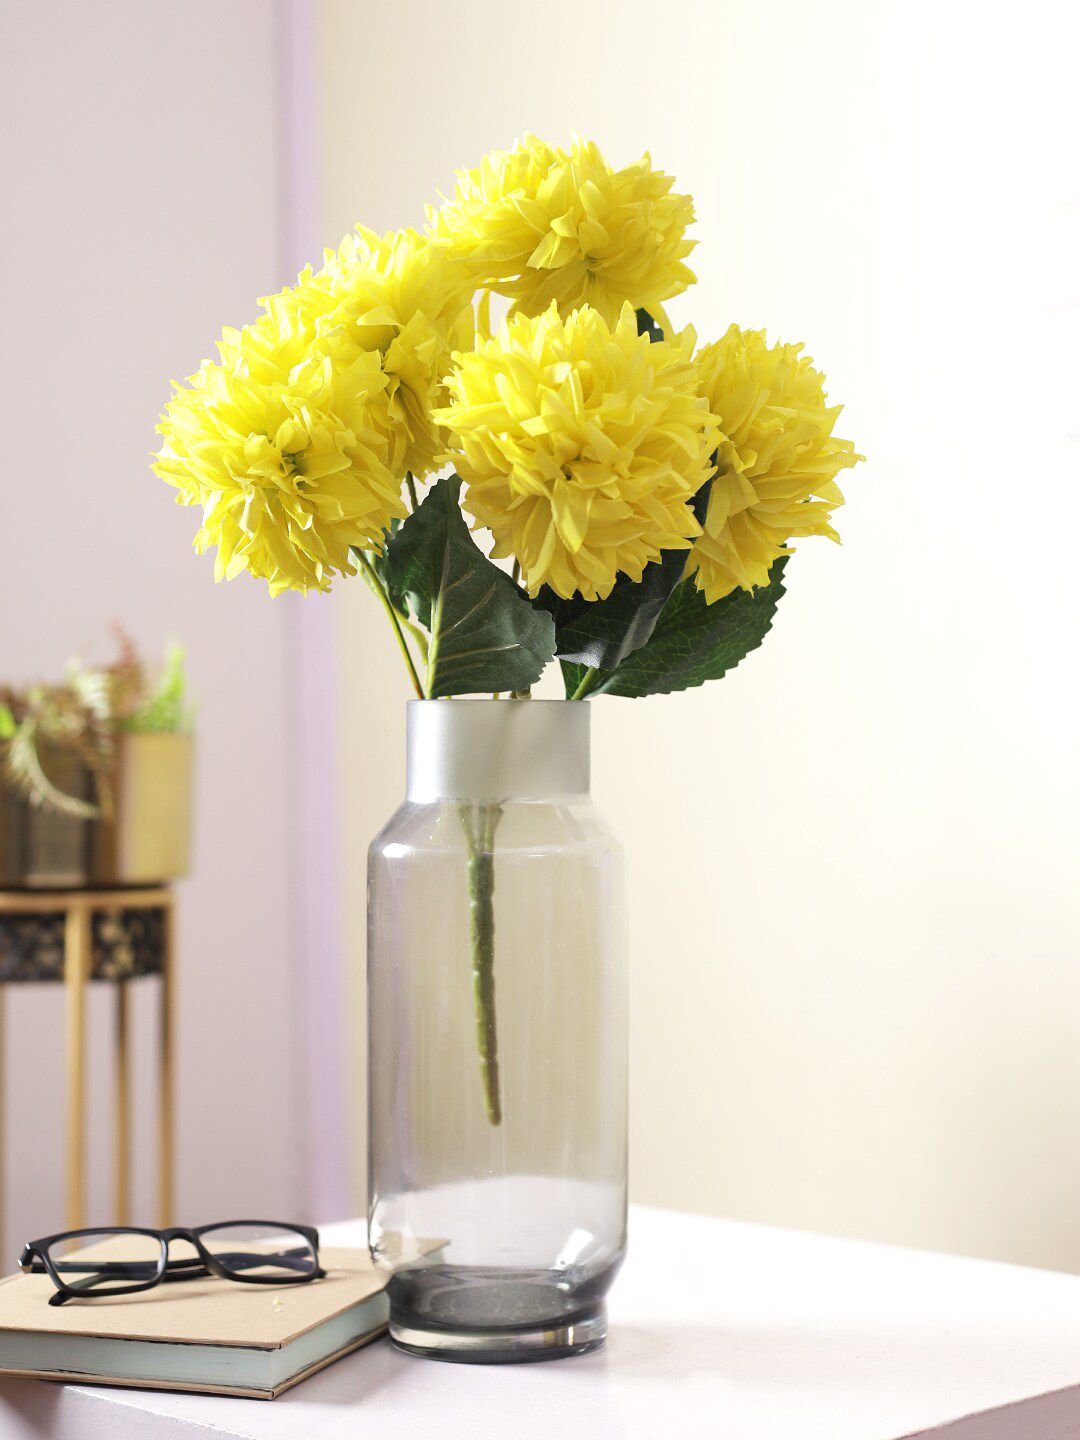 TAYHAA Yellow & Green Textured Artificial Chrysanthemum Flowers Price in India